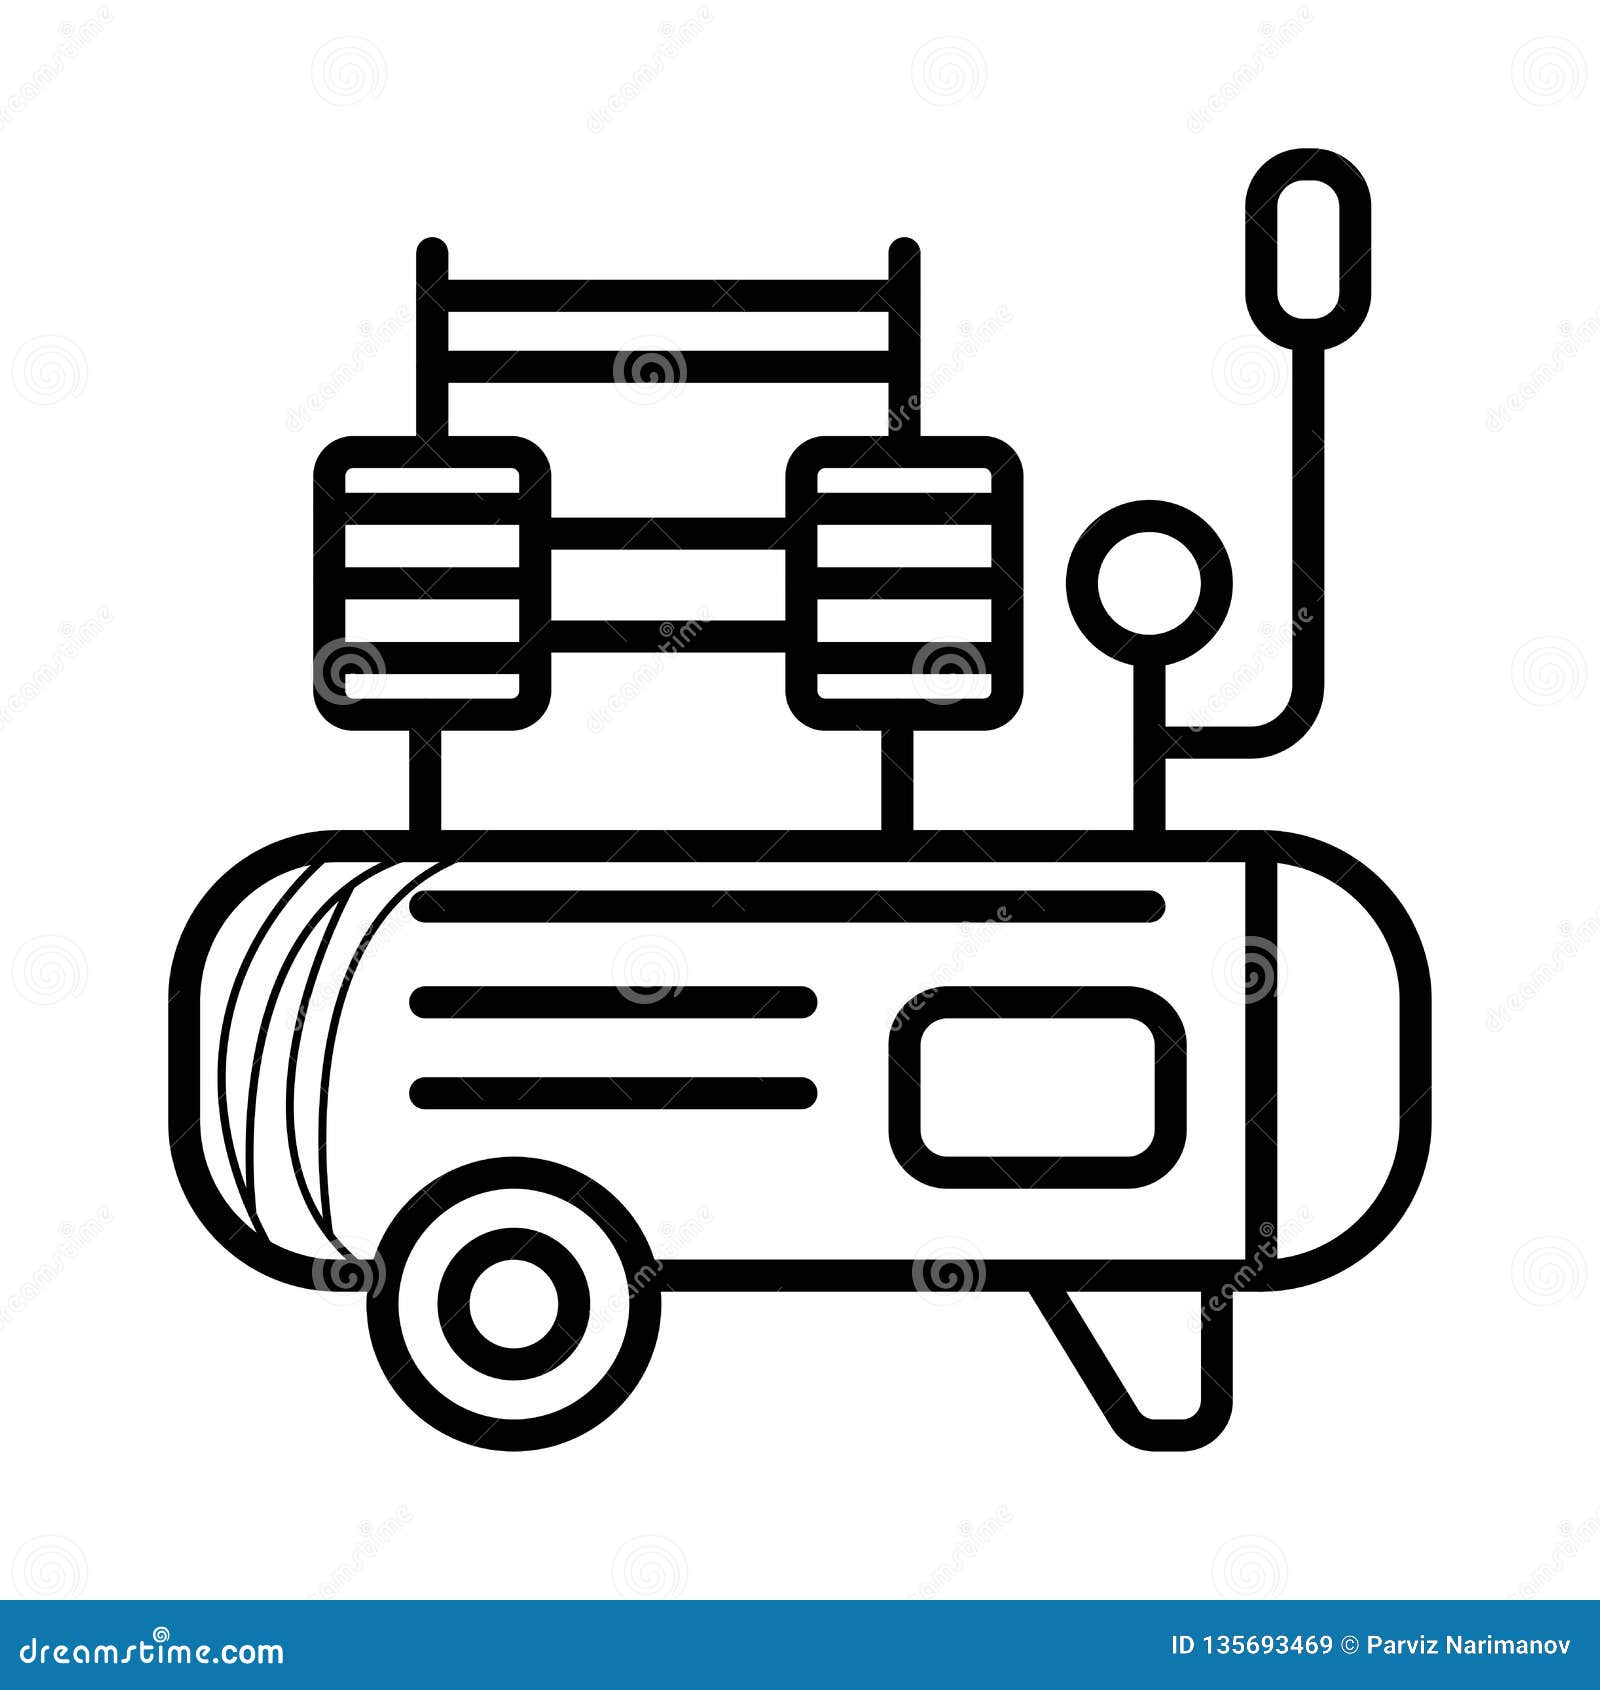 Download Air compressor icon stock illustration. Illustration of ...